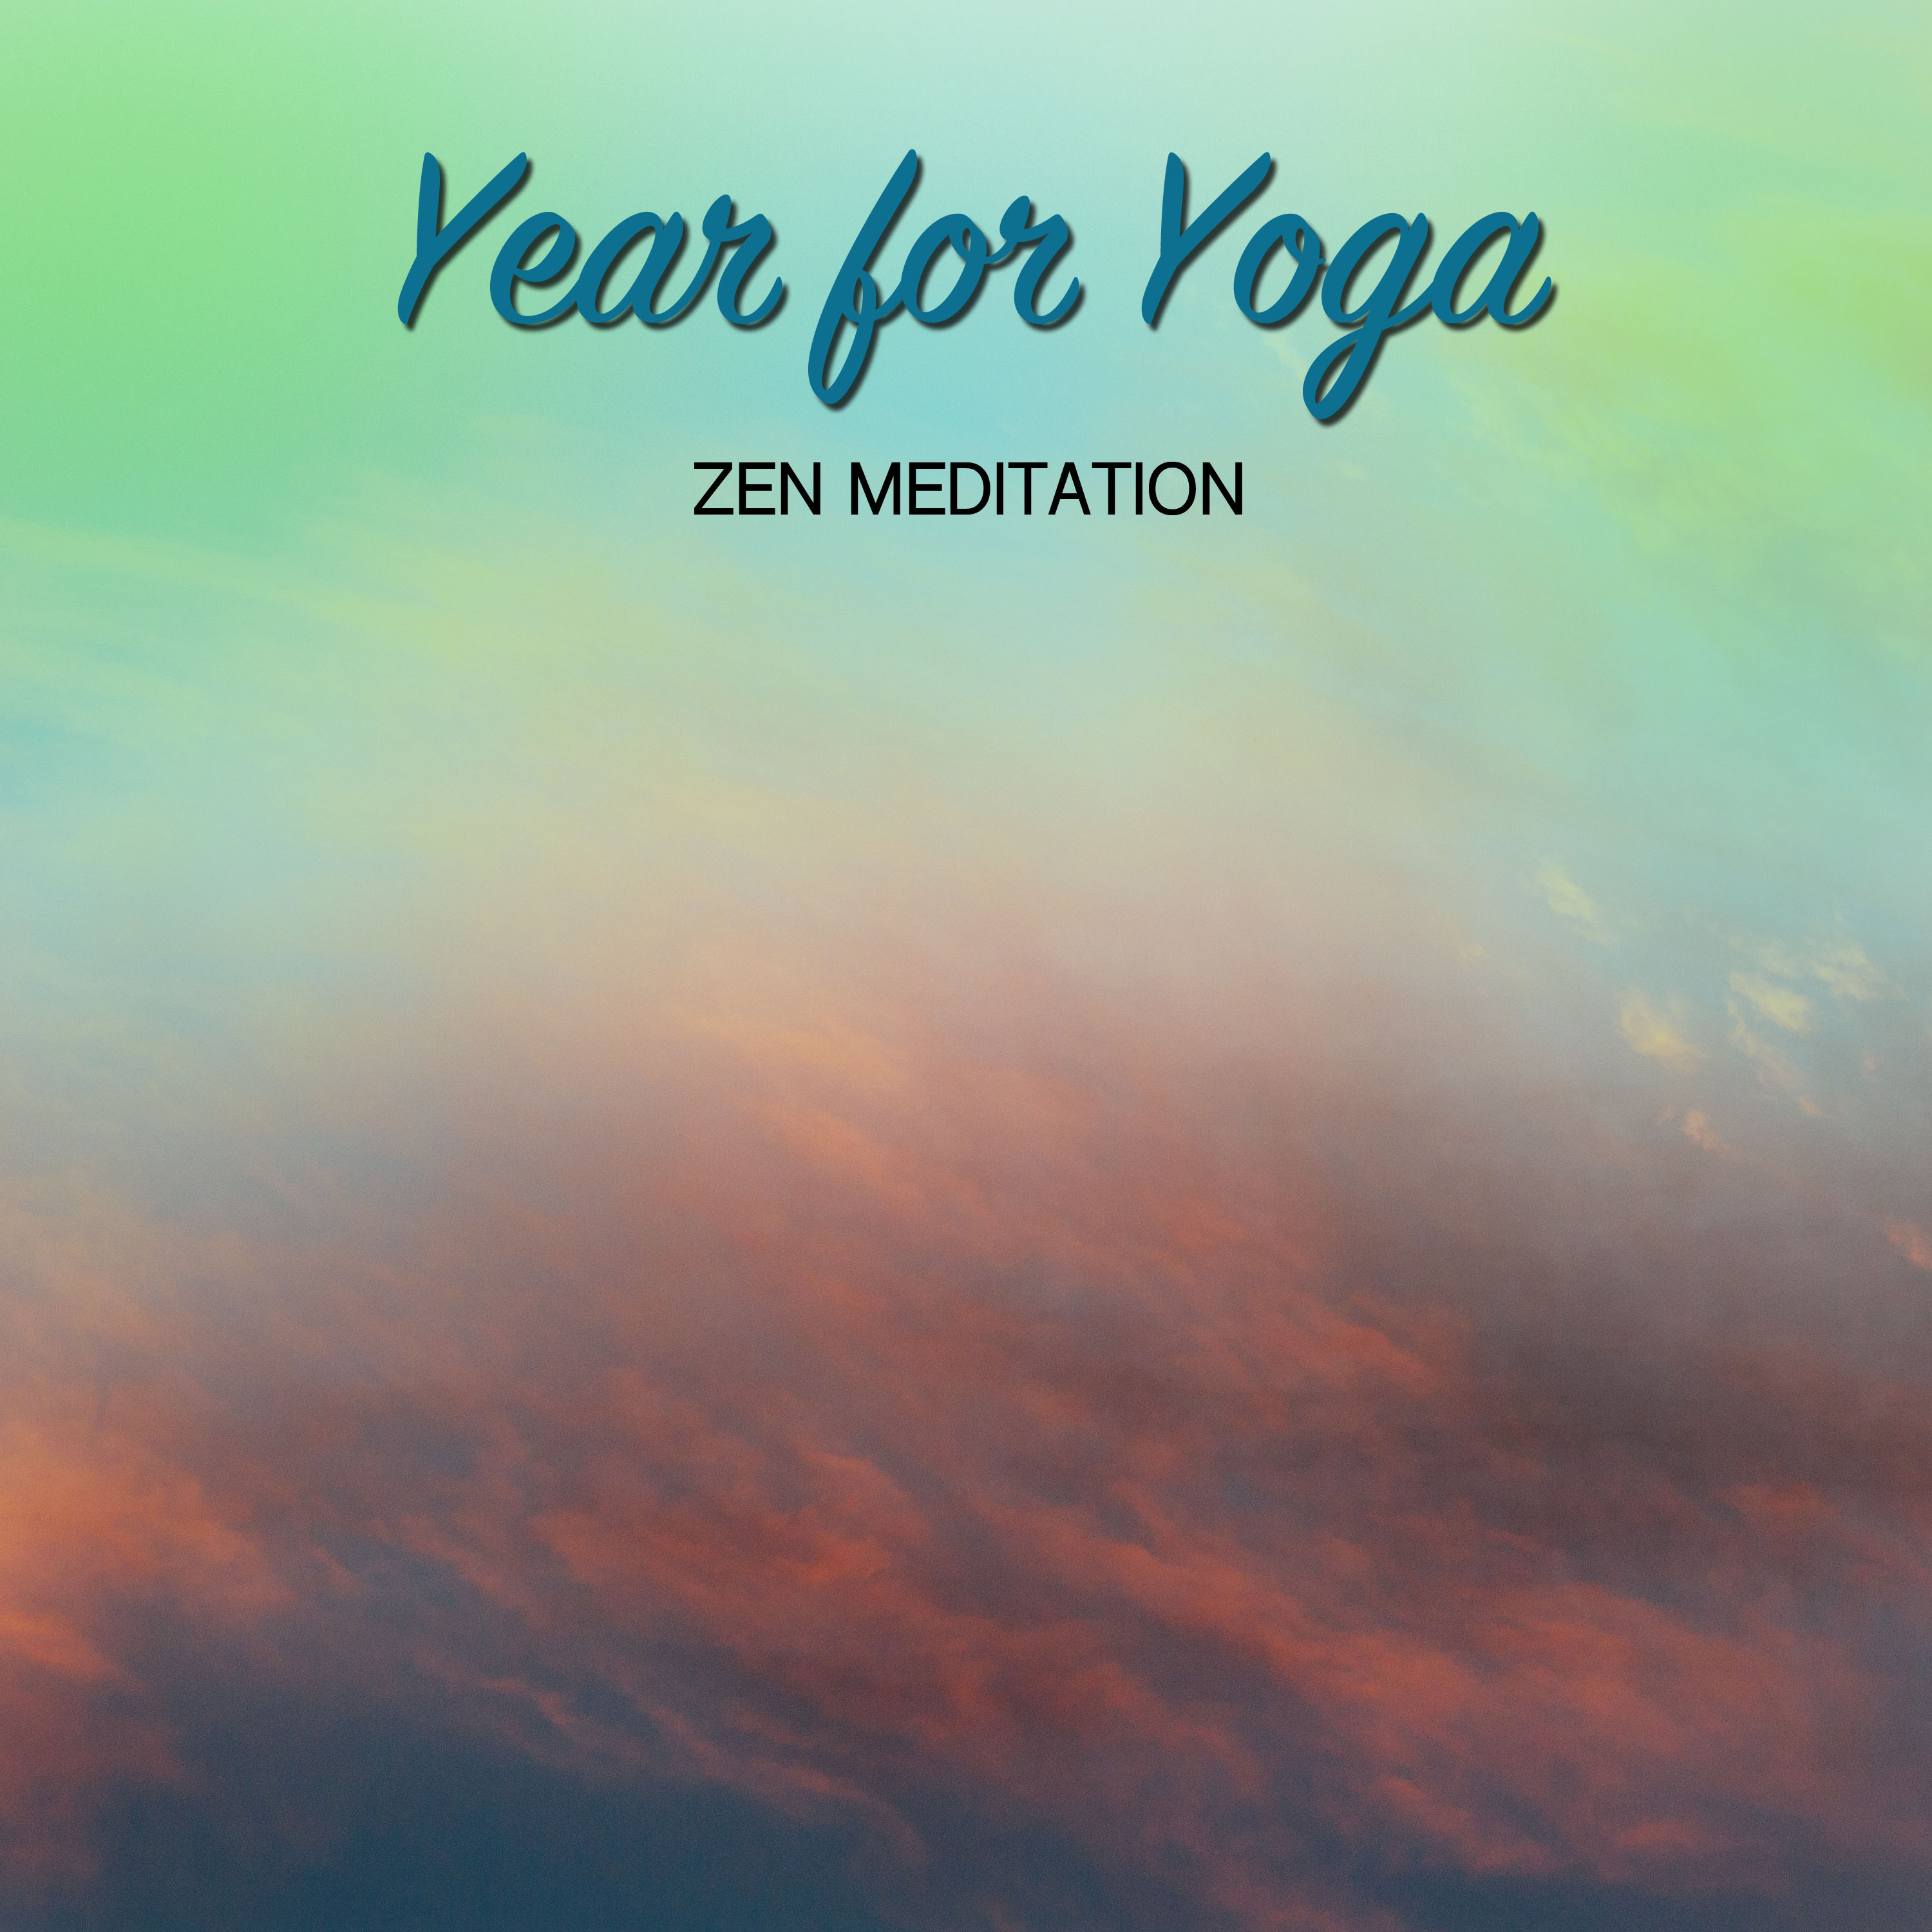 2018 - A Year for Yoga & Zen Meditation